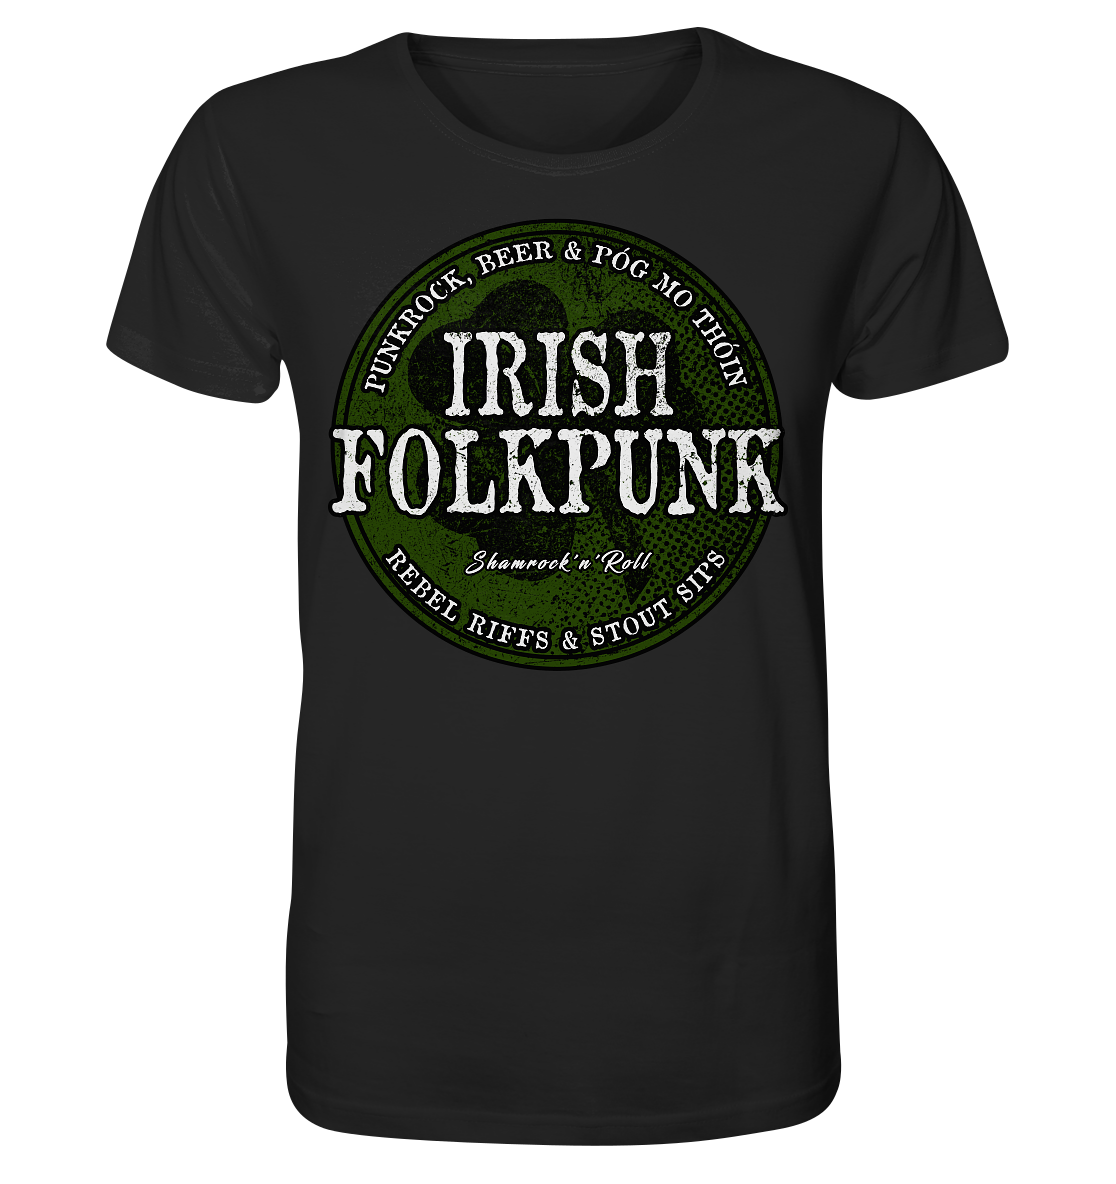 Irish Folkpunk "Shamrock'n'Roll" - Organic Shirt